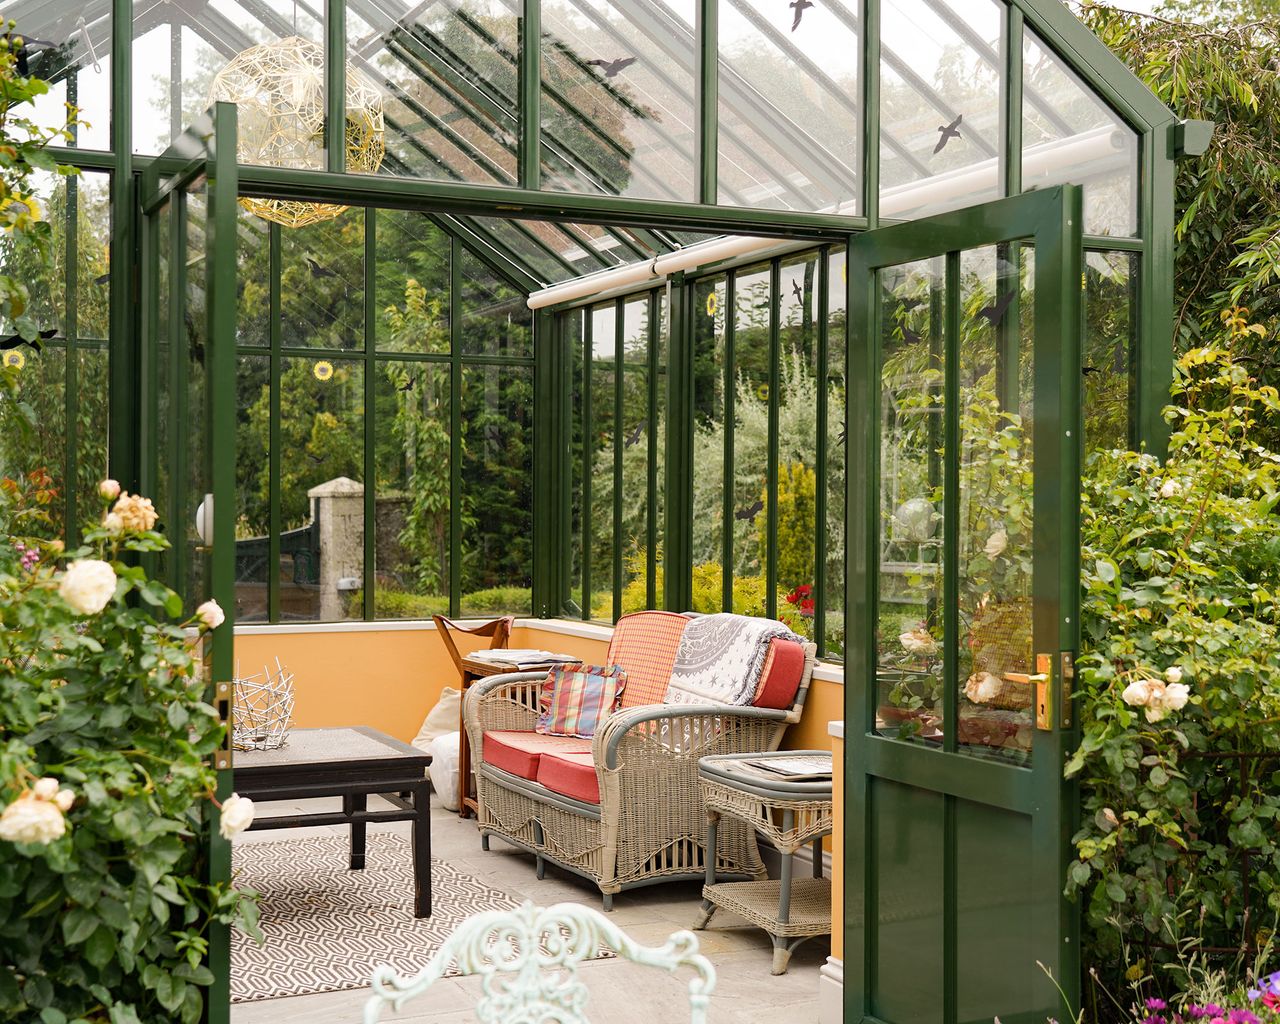 Conservatory ideas, design and inspiration – Garden room ideas | Homes